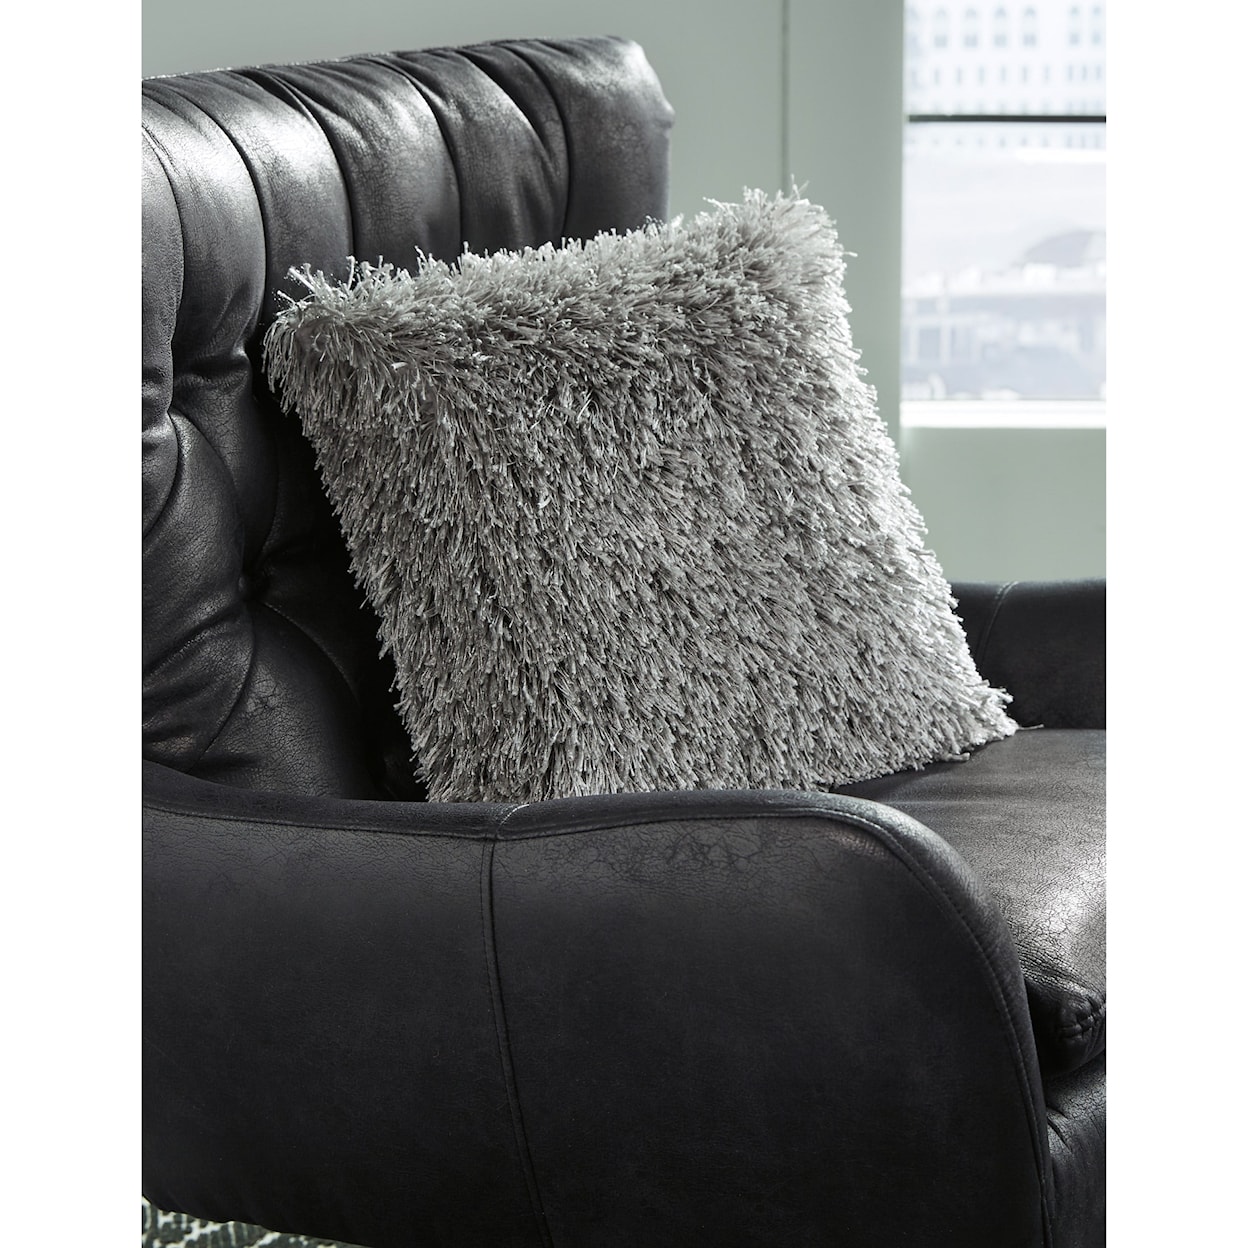 Ashley Furniture Signature Design Jasmen Jasmen Gray Pillow